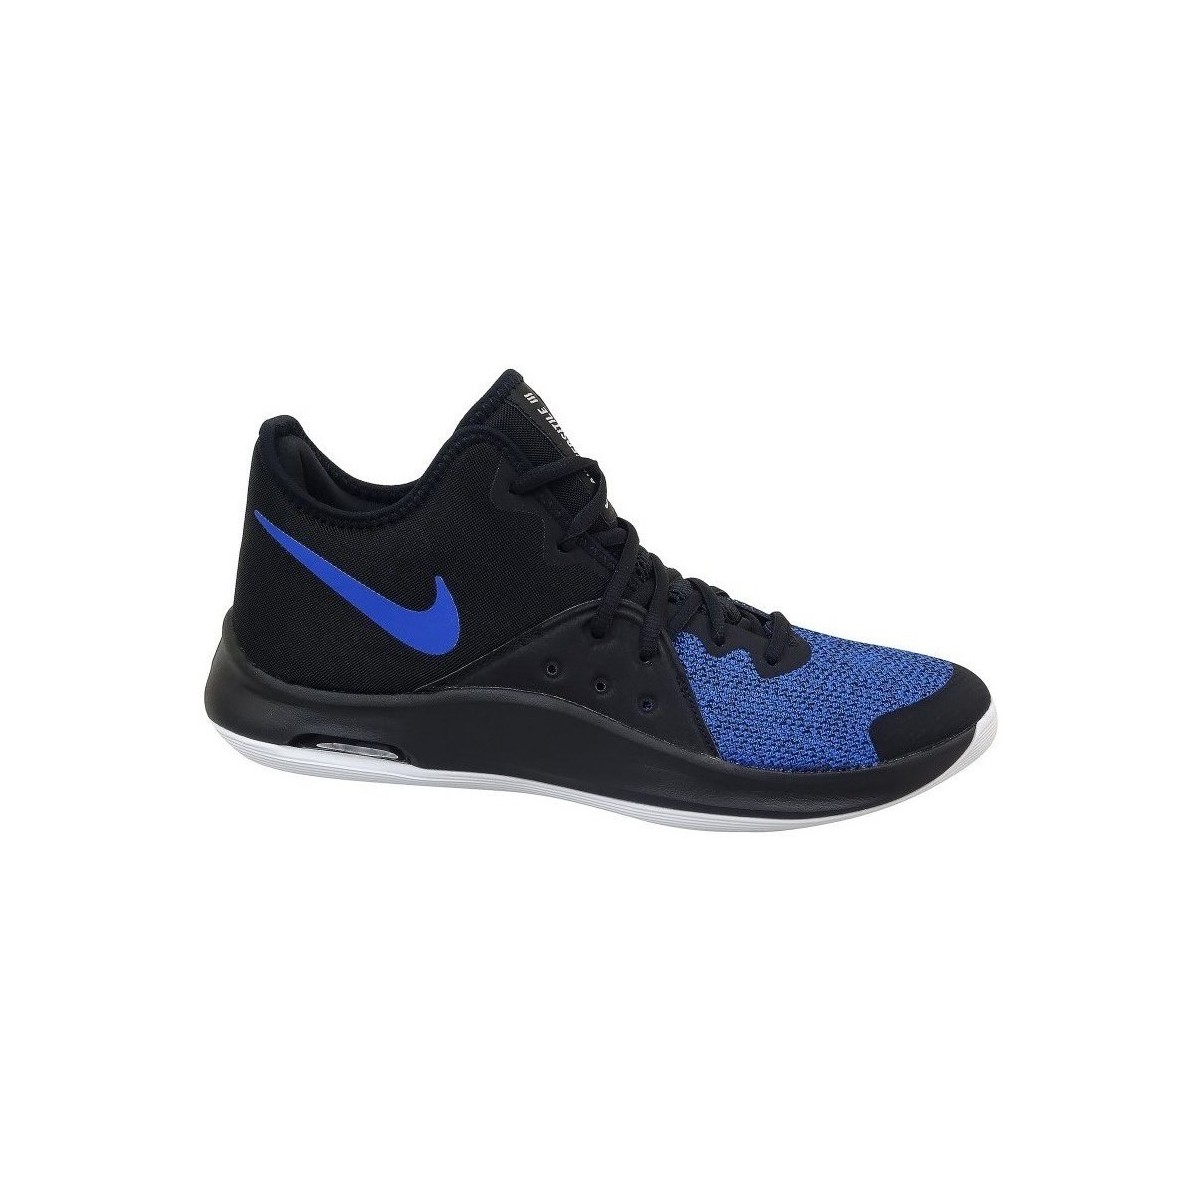 Pantofi Bărbați Basket Nike Air Versitile Iii Negre, Albastre